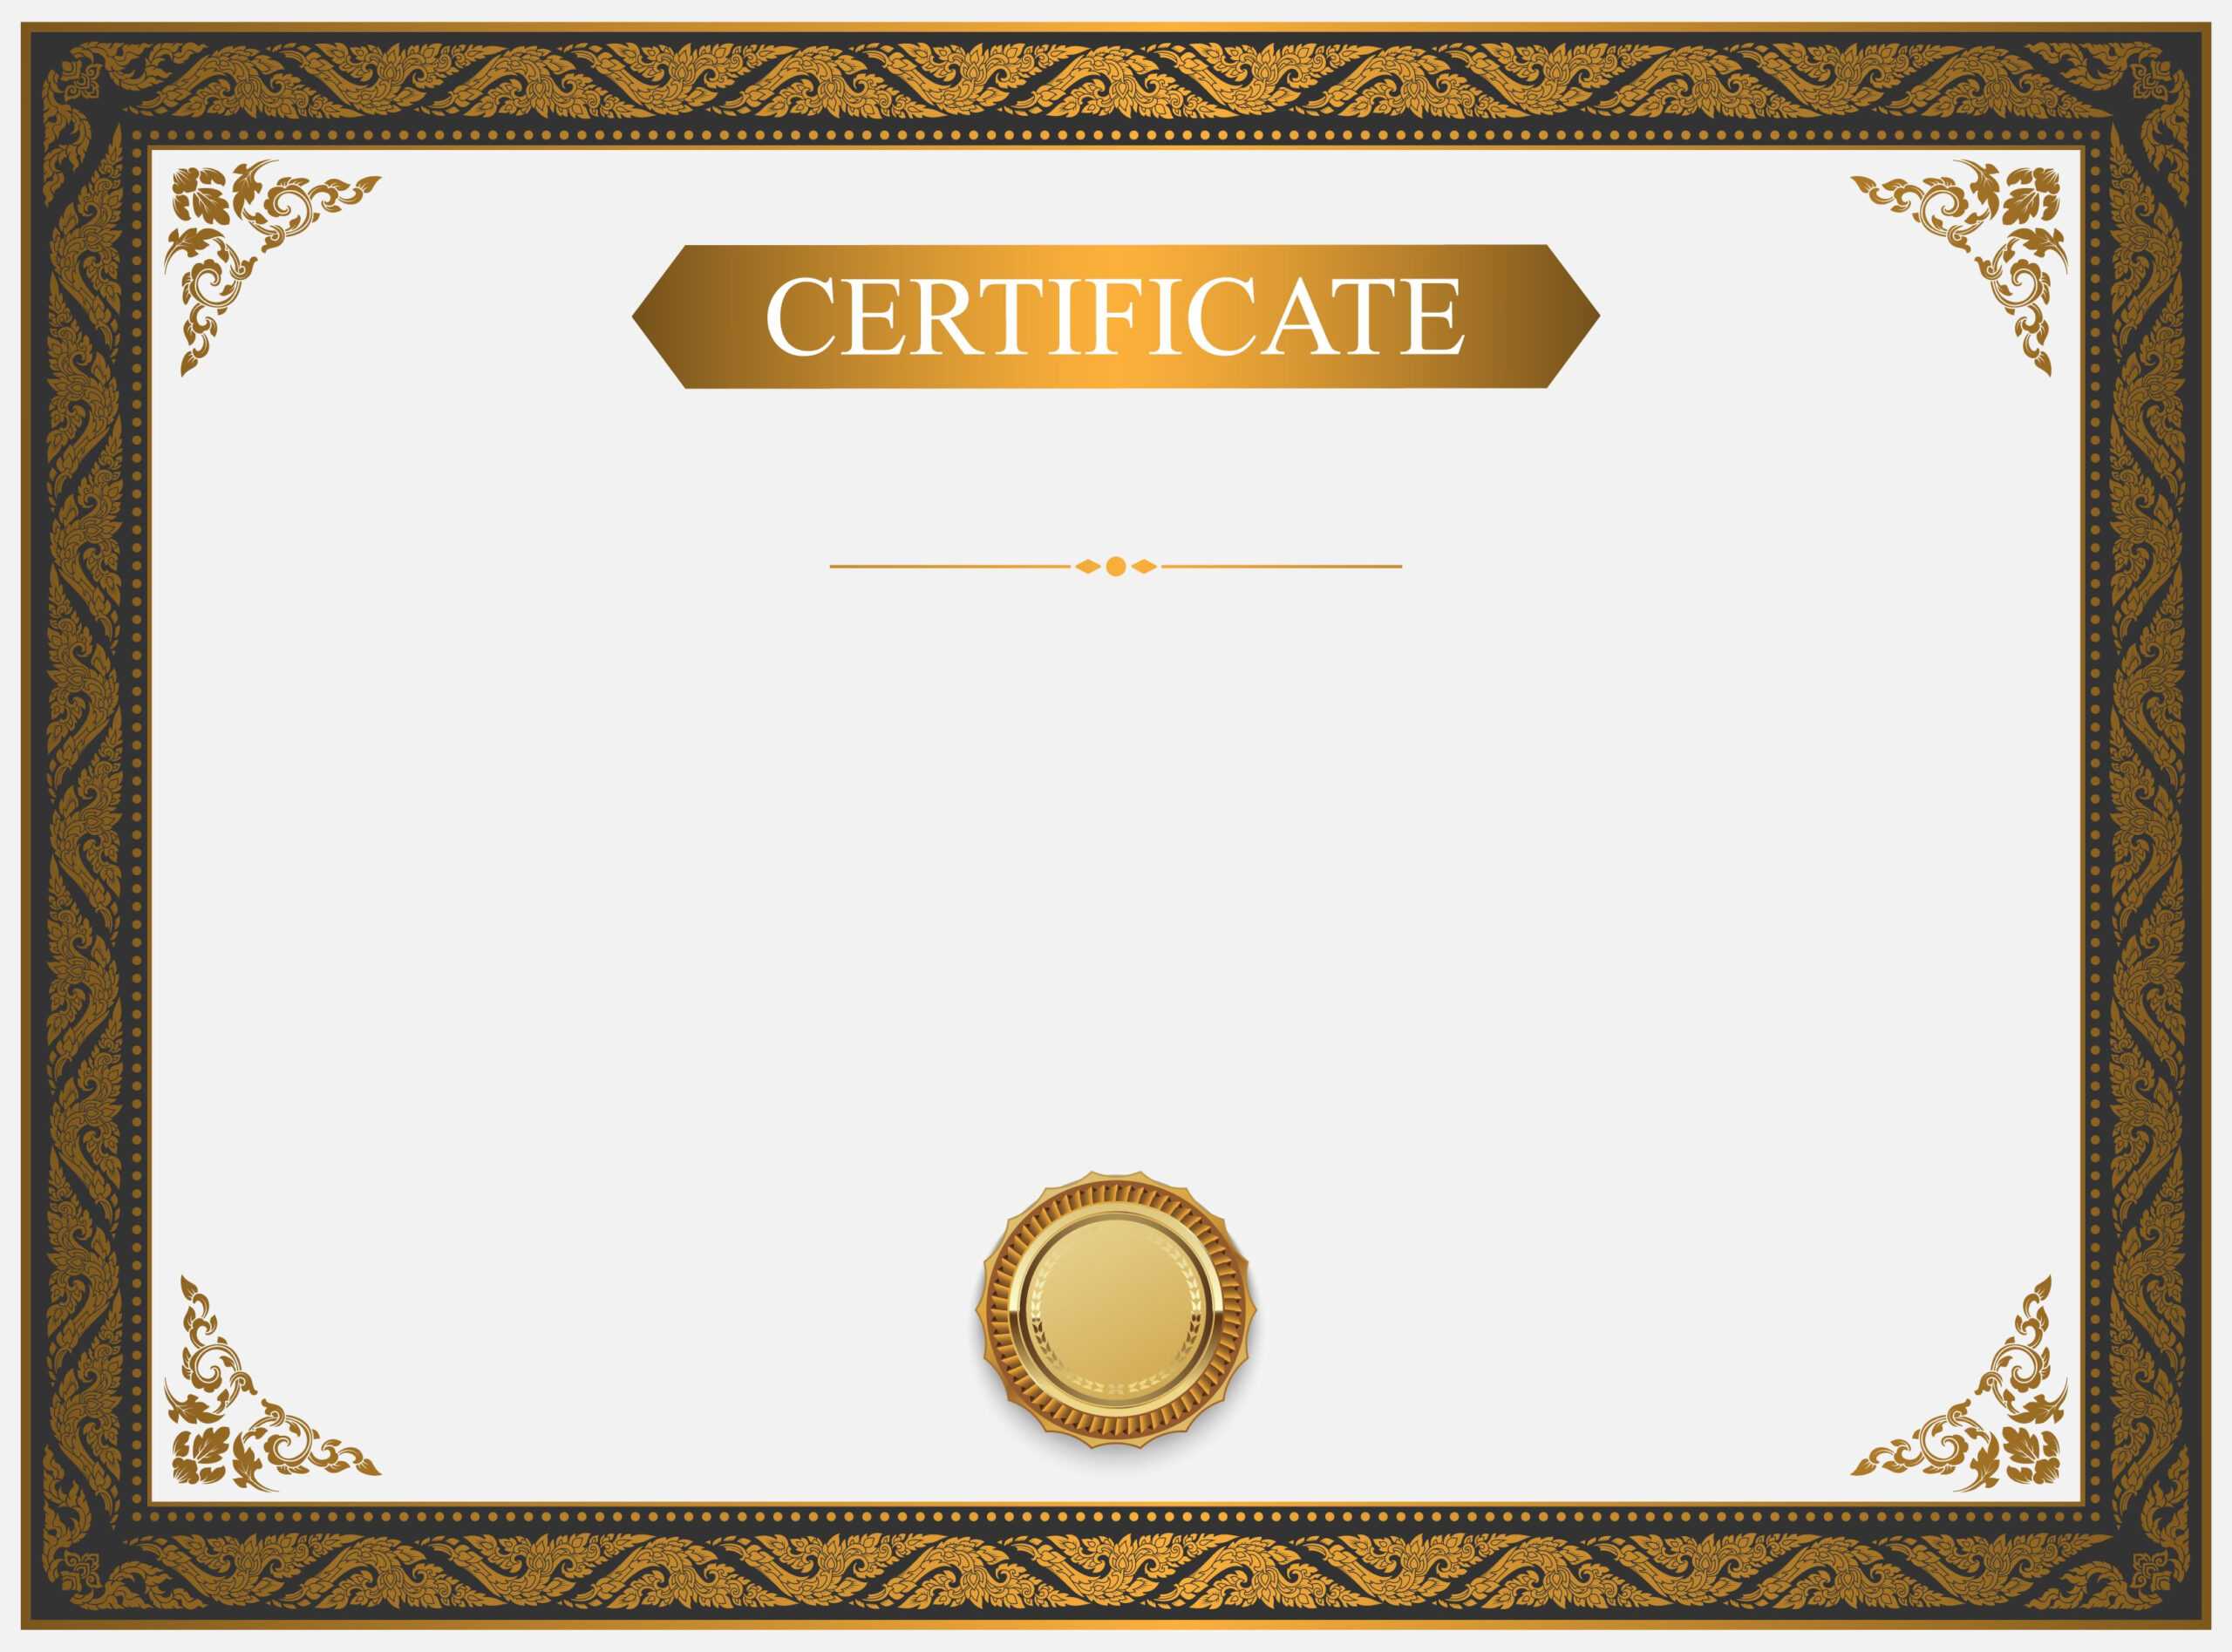 Certificate Format Border New 6 Borders Template Award For Award Certificate Border Template